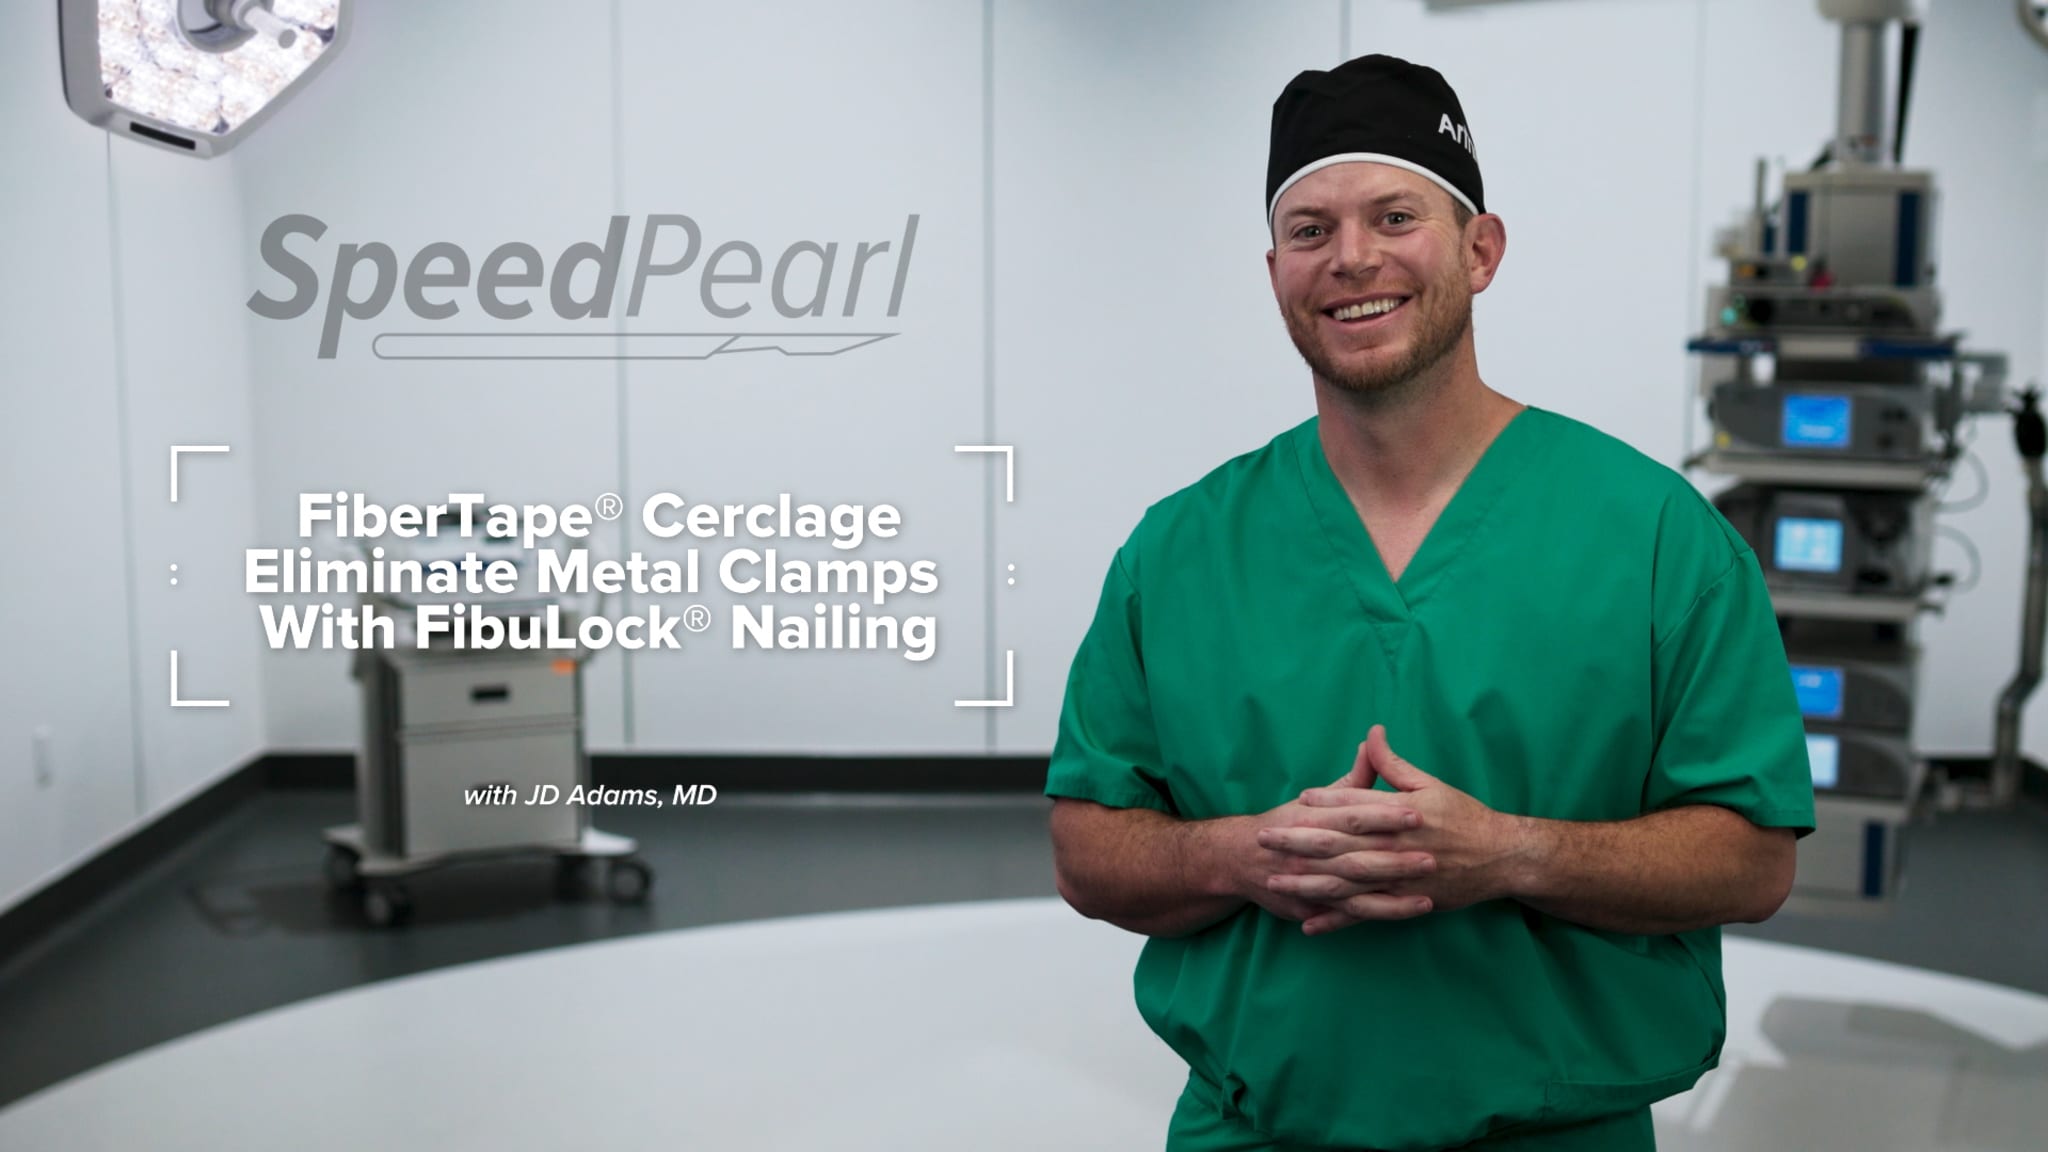 SpeedPearl: FiberTape® Cerclage—Eliminate Metal Clamps With FibuLock® Nailing